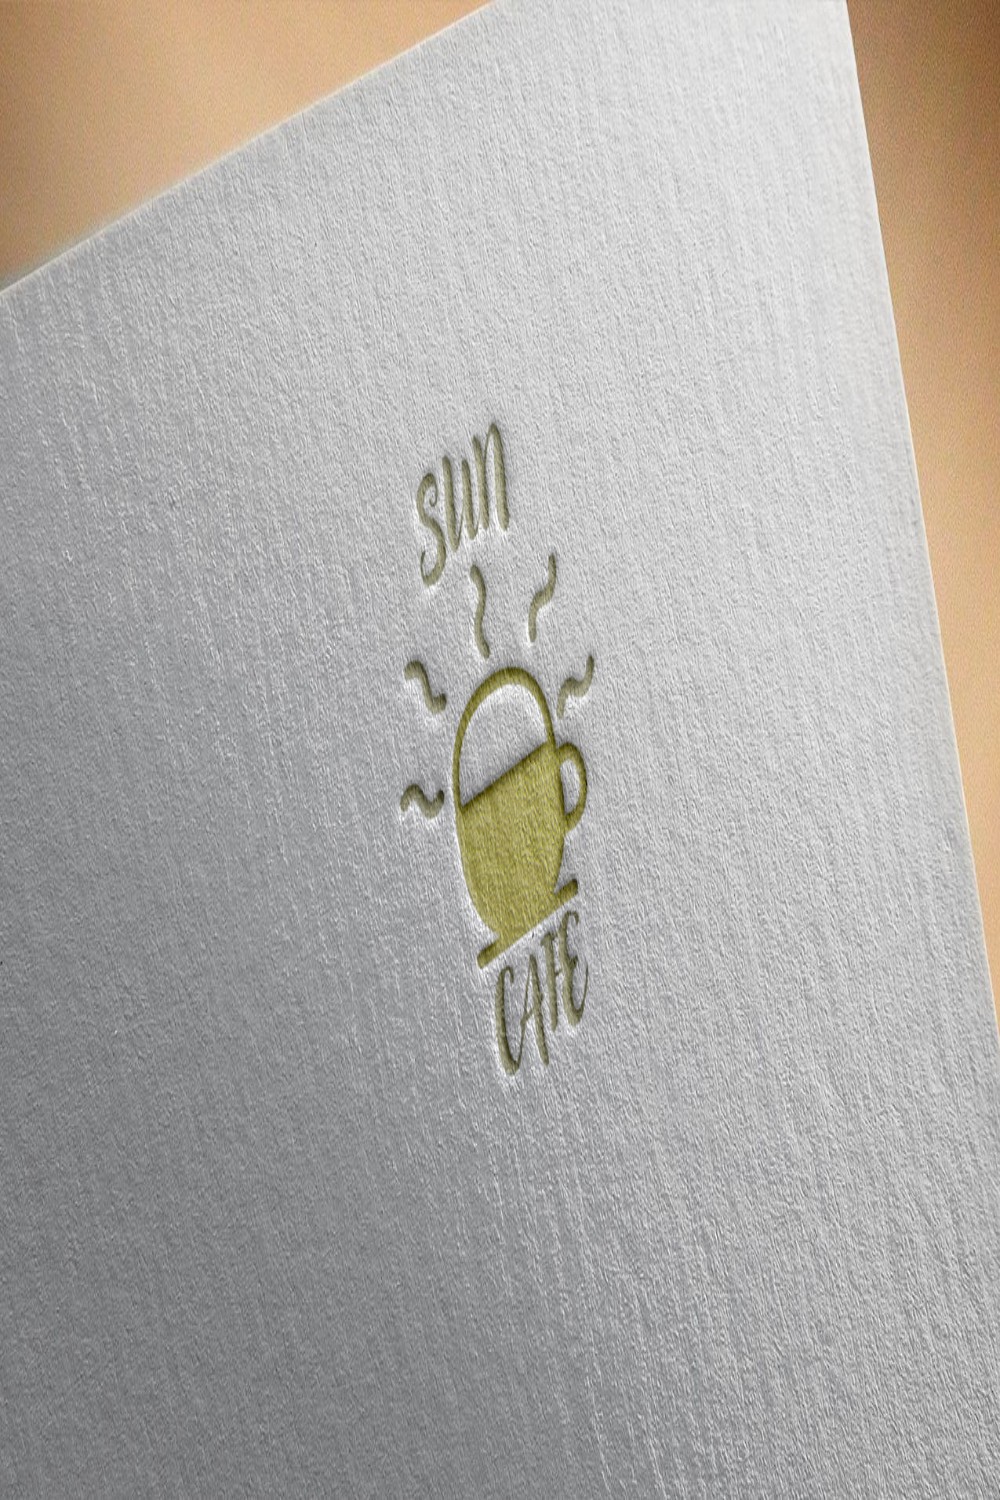 Sun Cafe Logo Design Pinterest image.